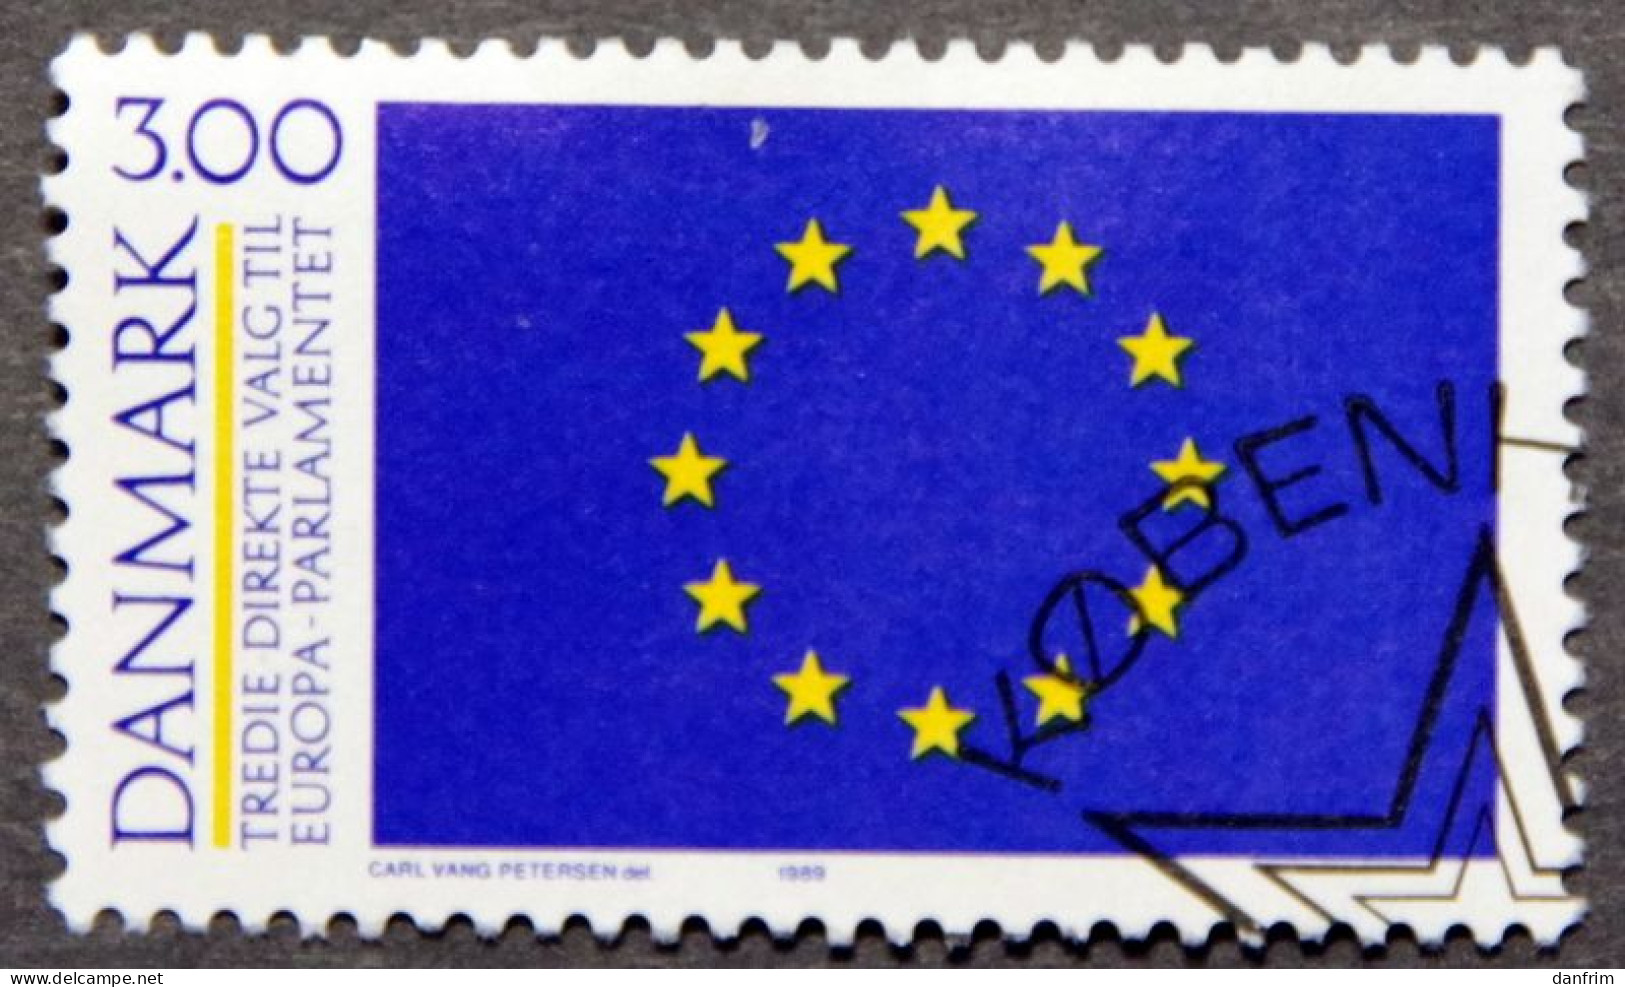 Denmark 1989 MiNr. 949 (O)  Europæiske Parlament ( Lot K 715) - Gebruikt